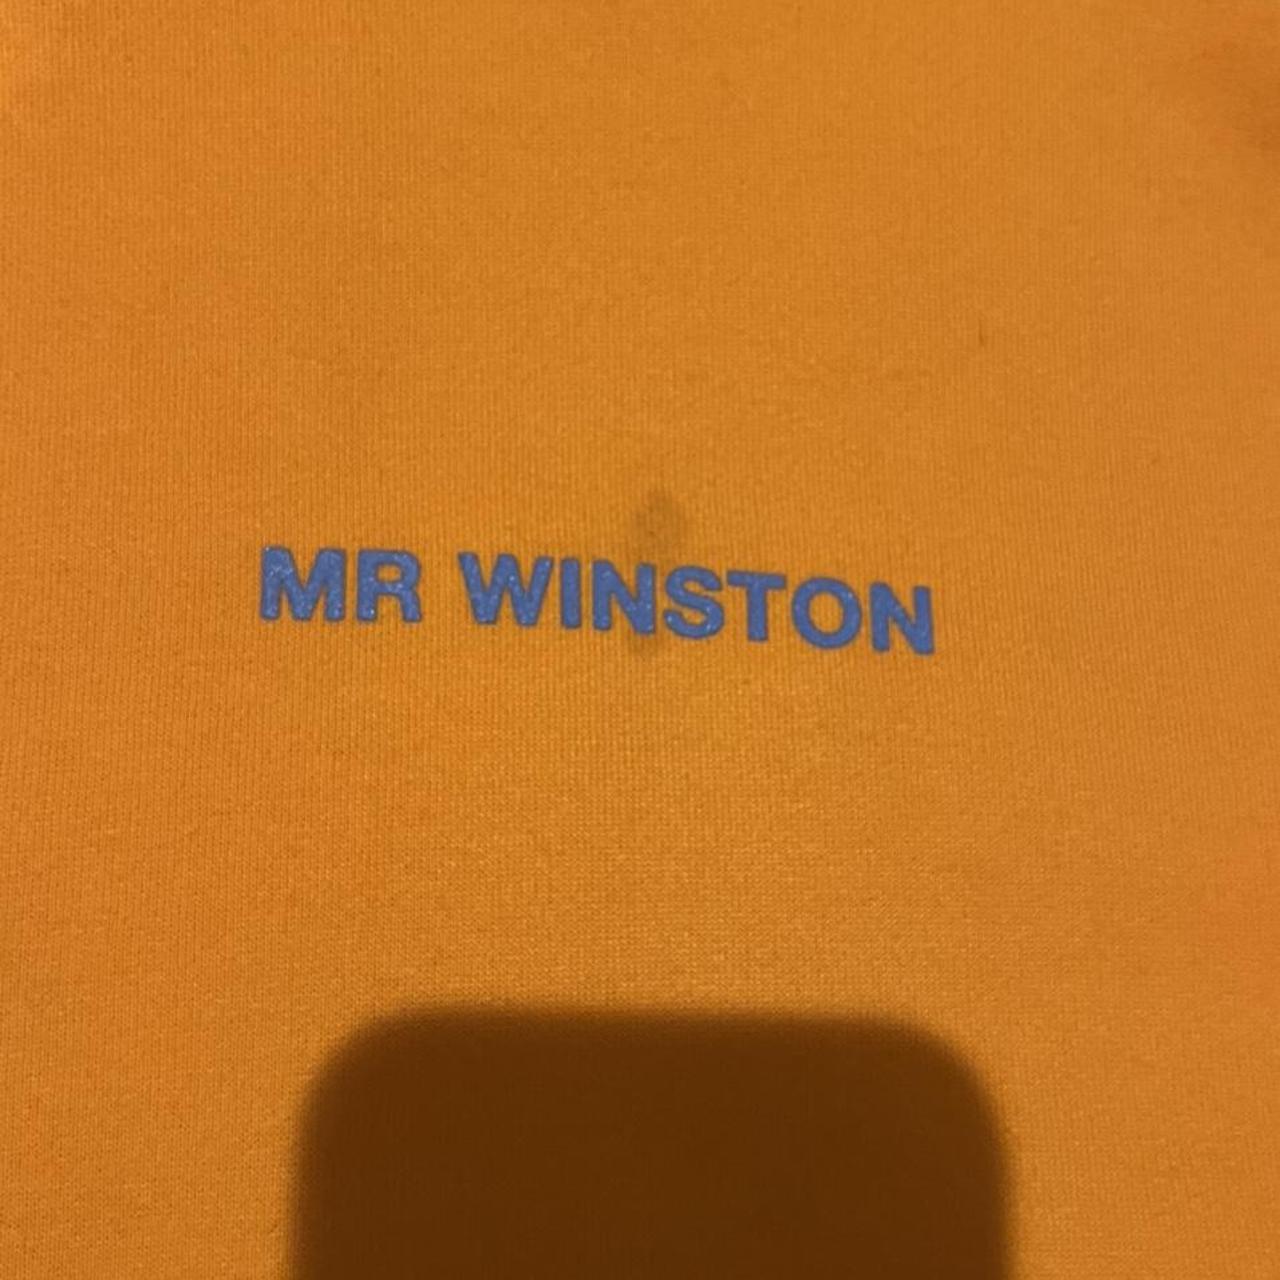 Product Image 2 - Mr Winston orange hoodie. Only